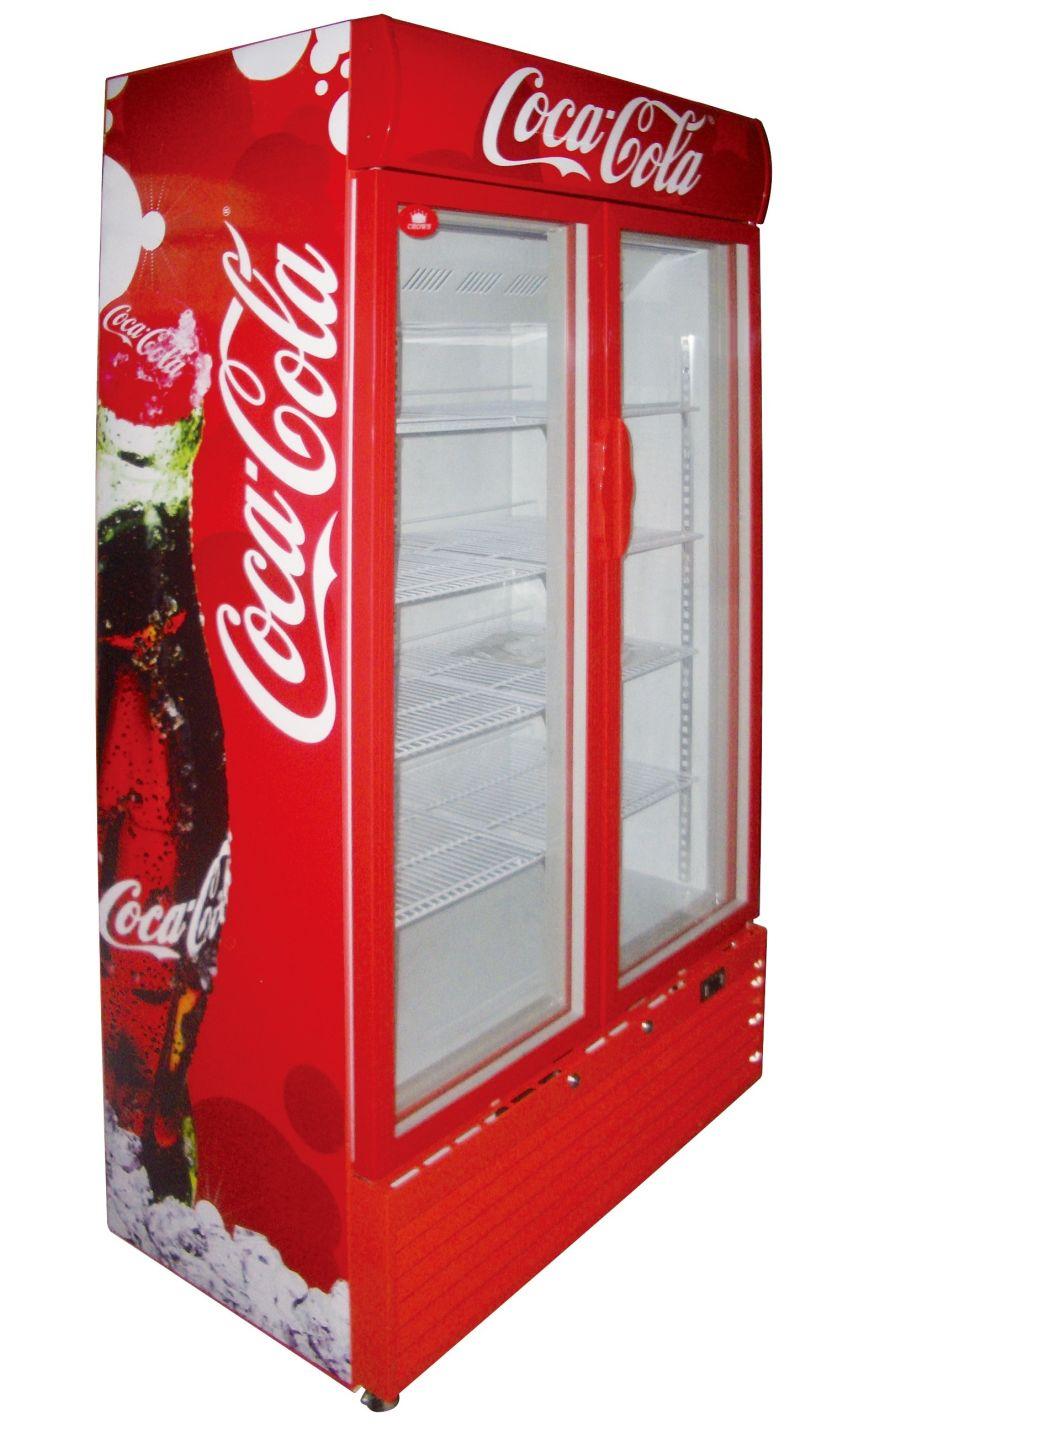 Dukers 138L Single Door Beer Cooler, Back Bar Cooler, Glass Showcase, Beer Display Case